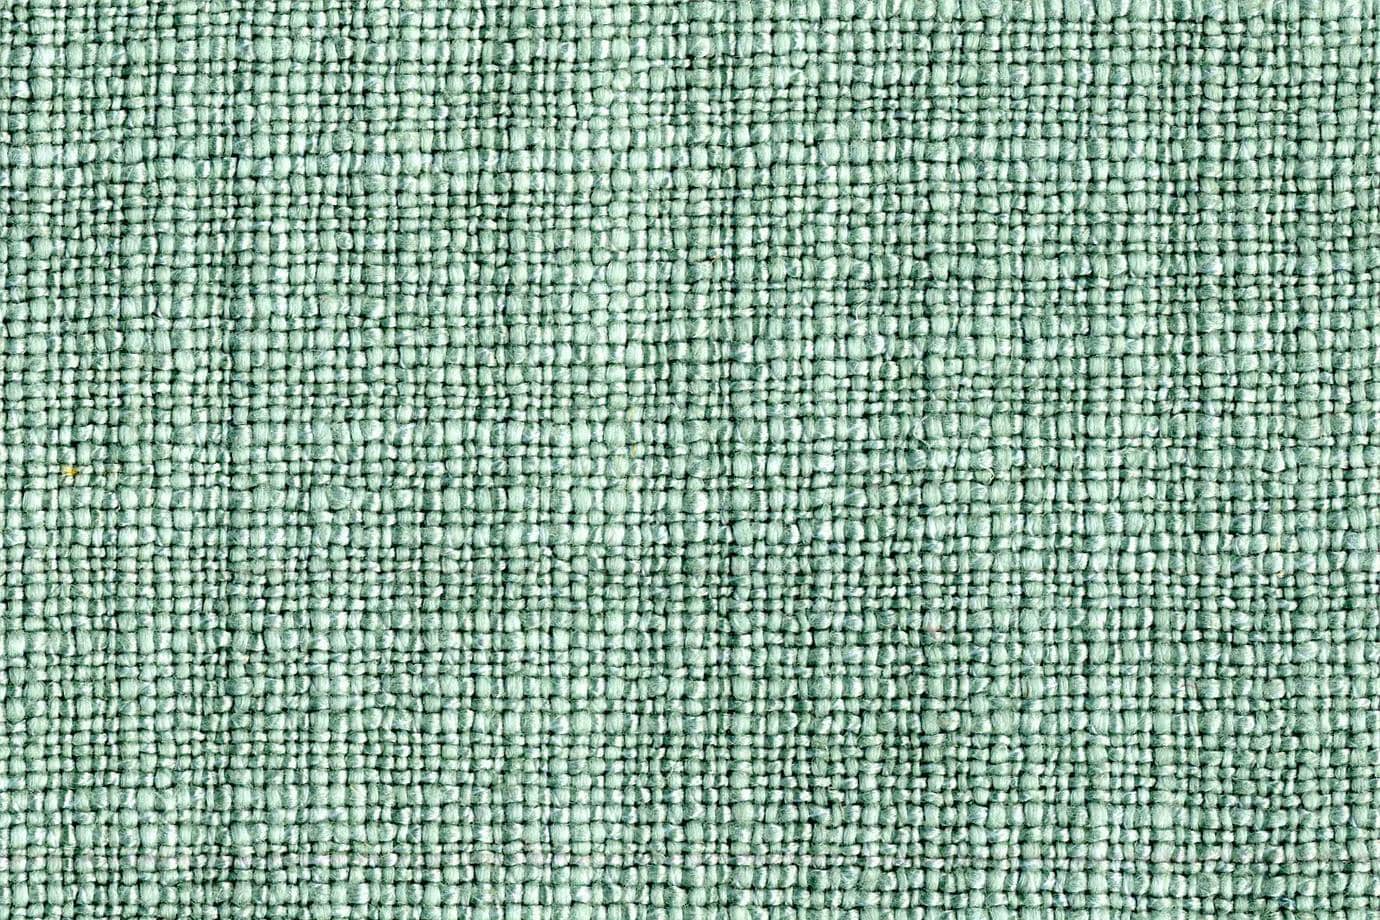 J1594 MEO PATACCA 019 Malachite home decoration fabric